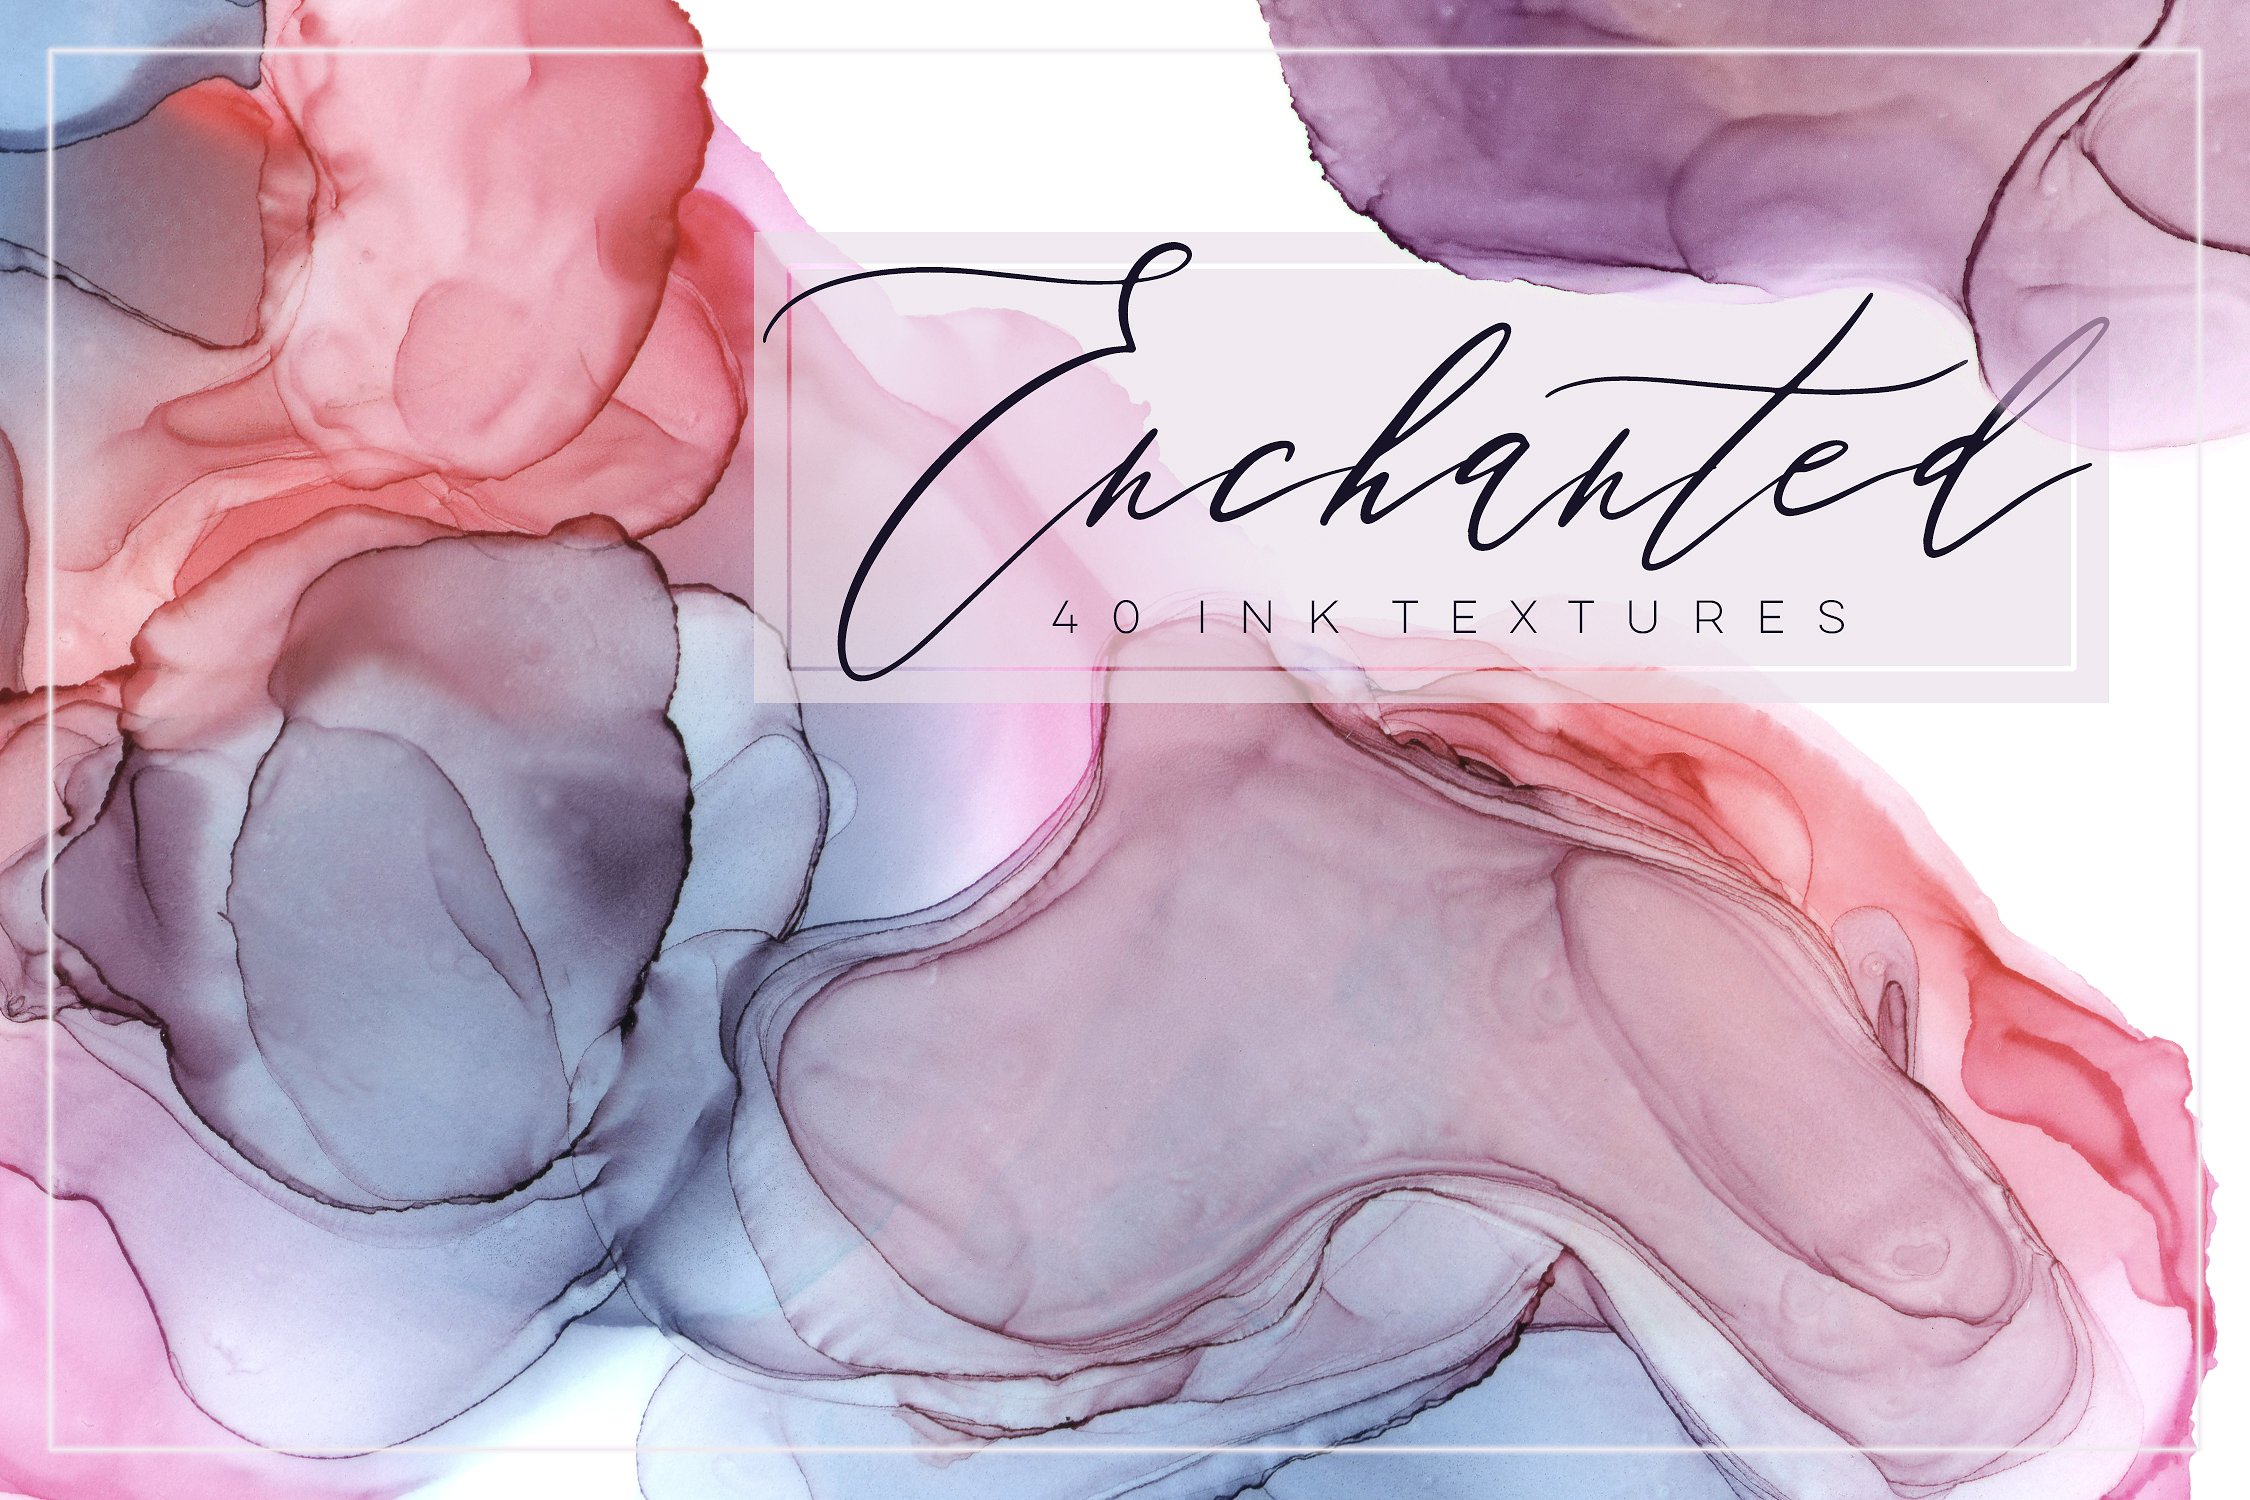 奇幻魔法墨水纹理 Enchanted Ink Textures插图